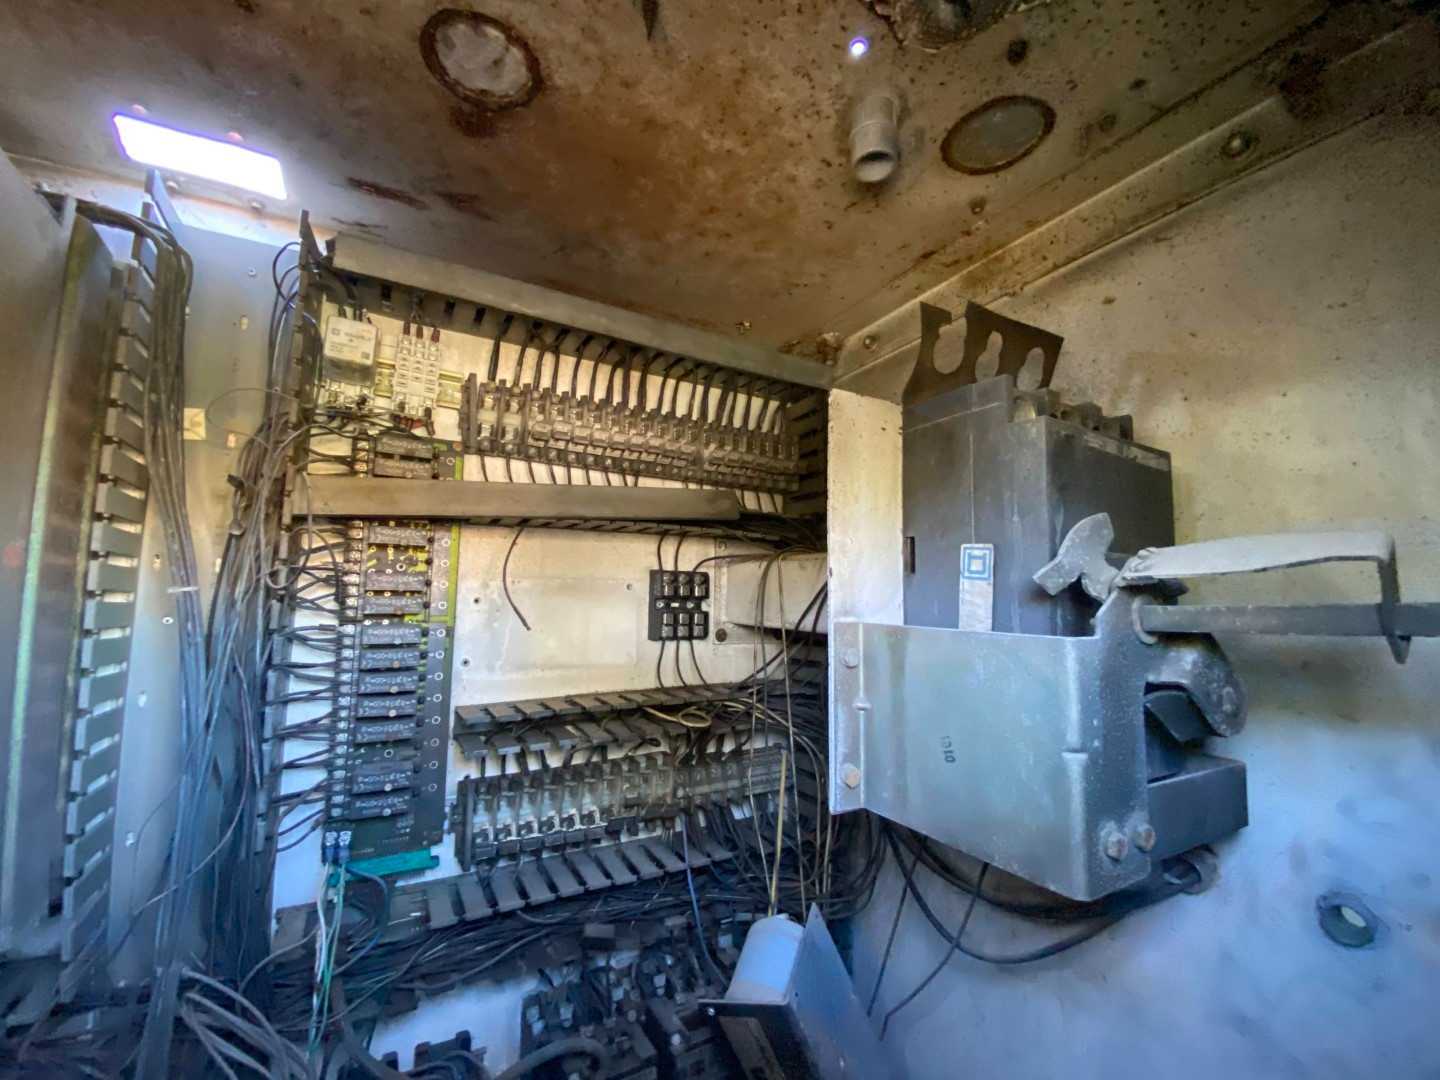 Allen-Bradley Control Panel